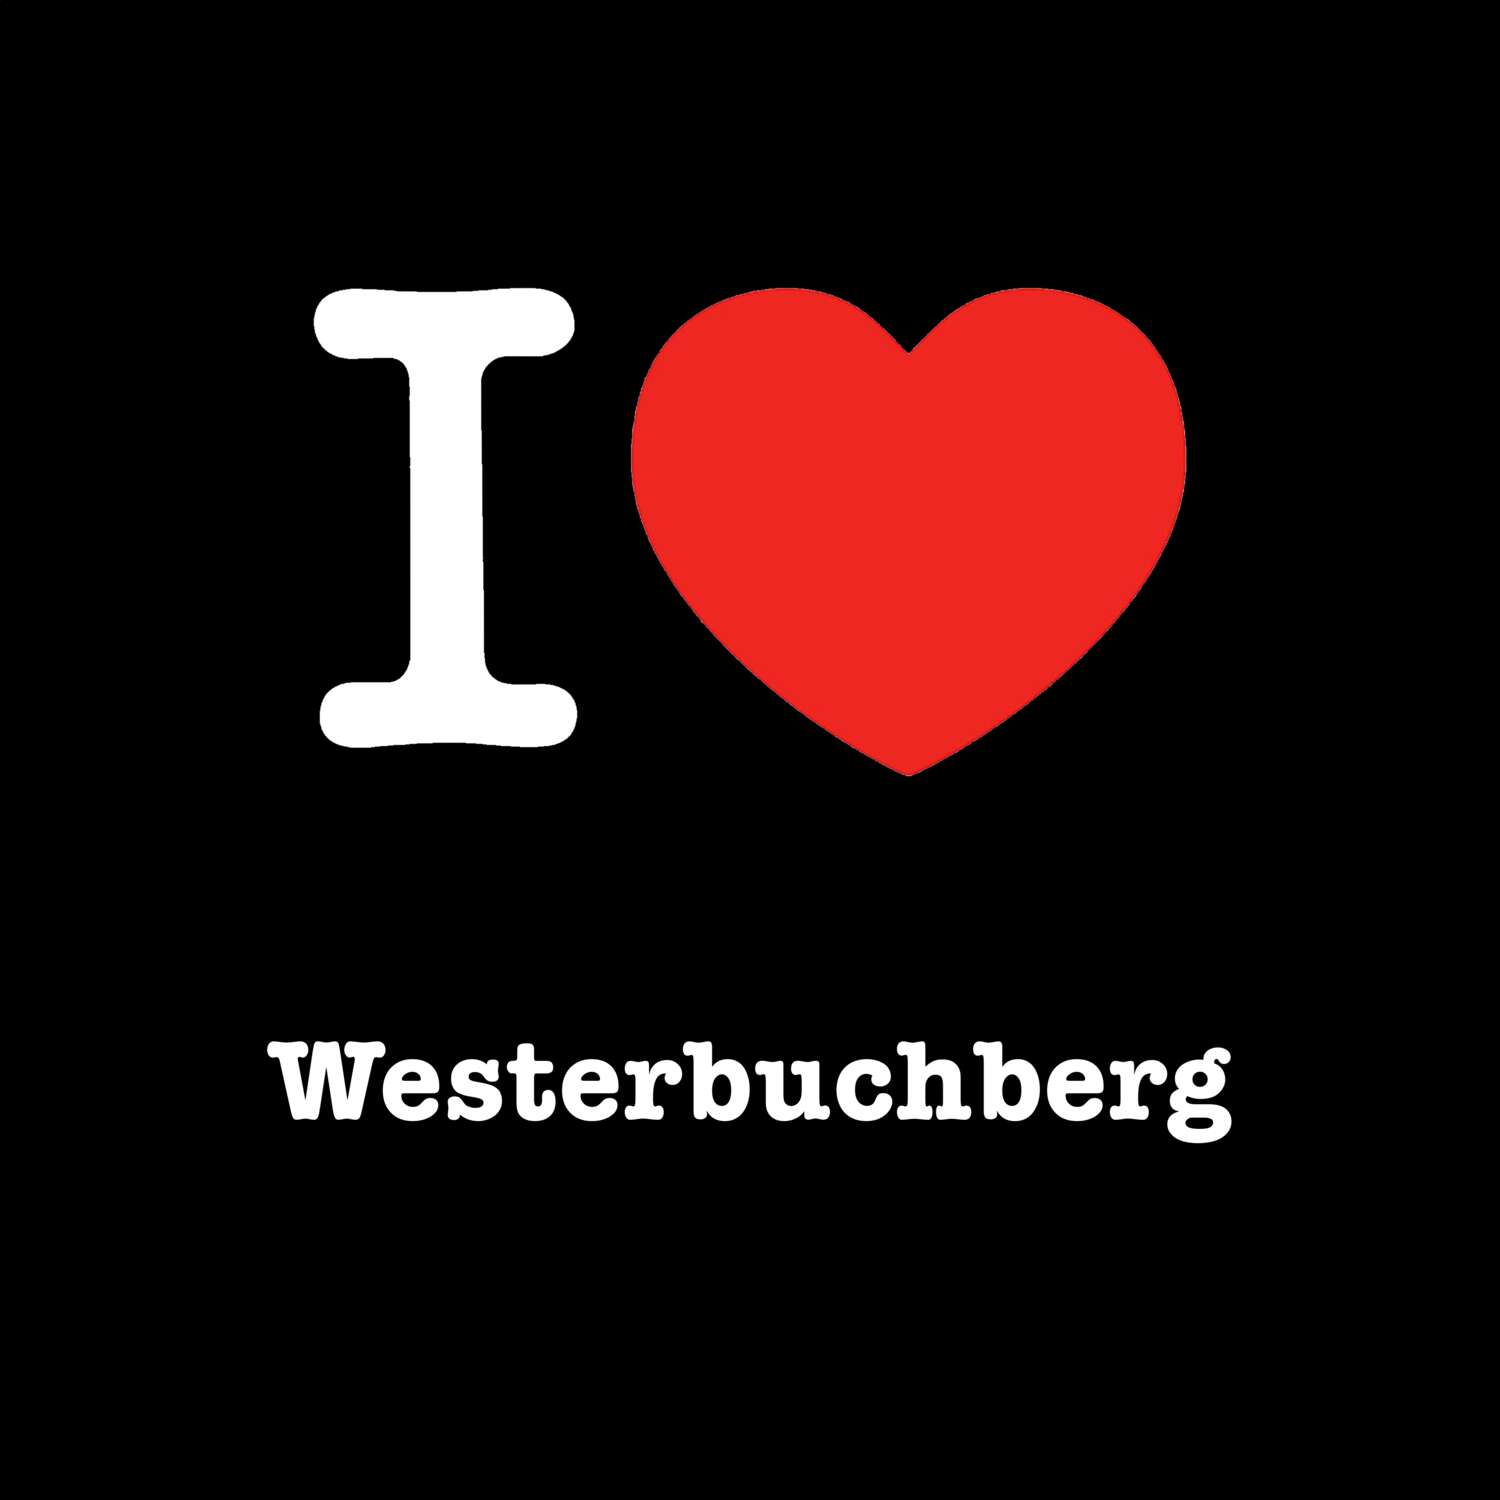 Westerbuchberg T-Shirt »I love«